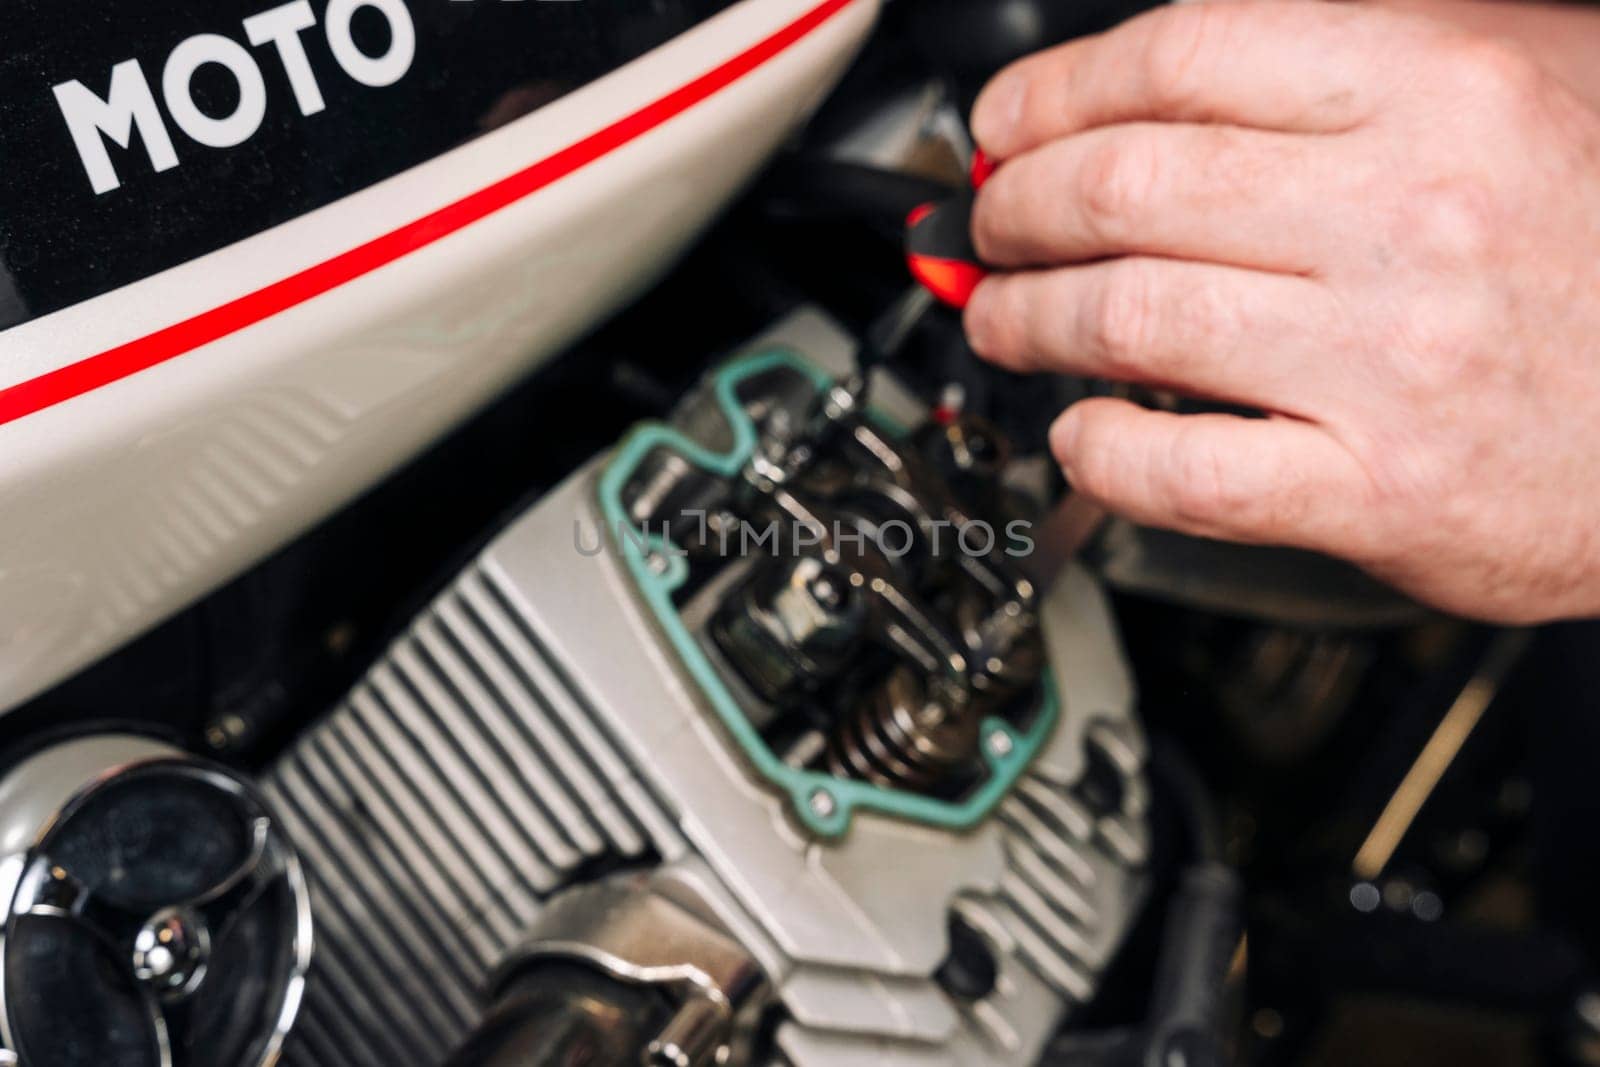 adjustment of gaps of valves in the motorcycle engine. Mechanism settings. Springs and adjusting screw of gaps of valves, dipstick. garage service or at the workshop. adjusting engine valves of motorcycle at the workshop